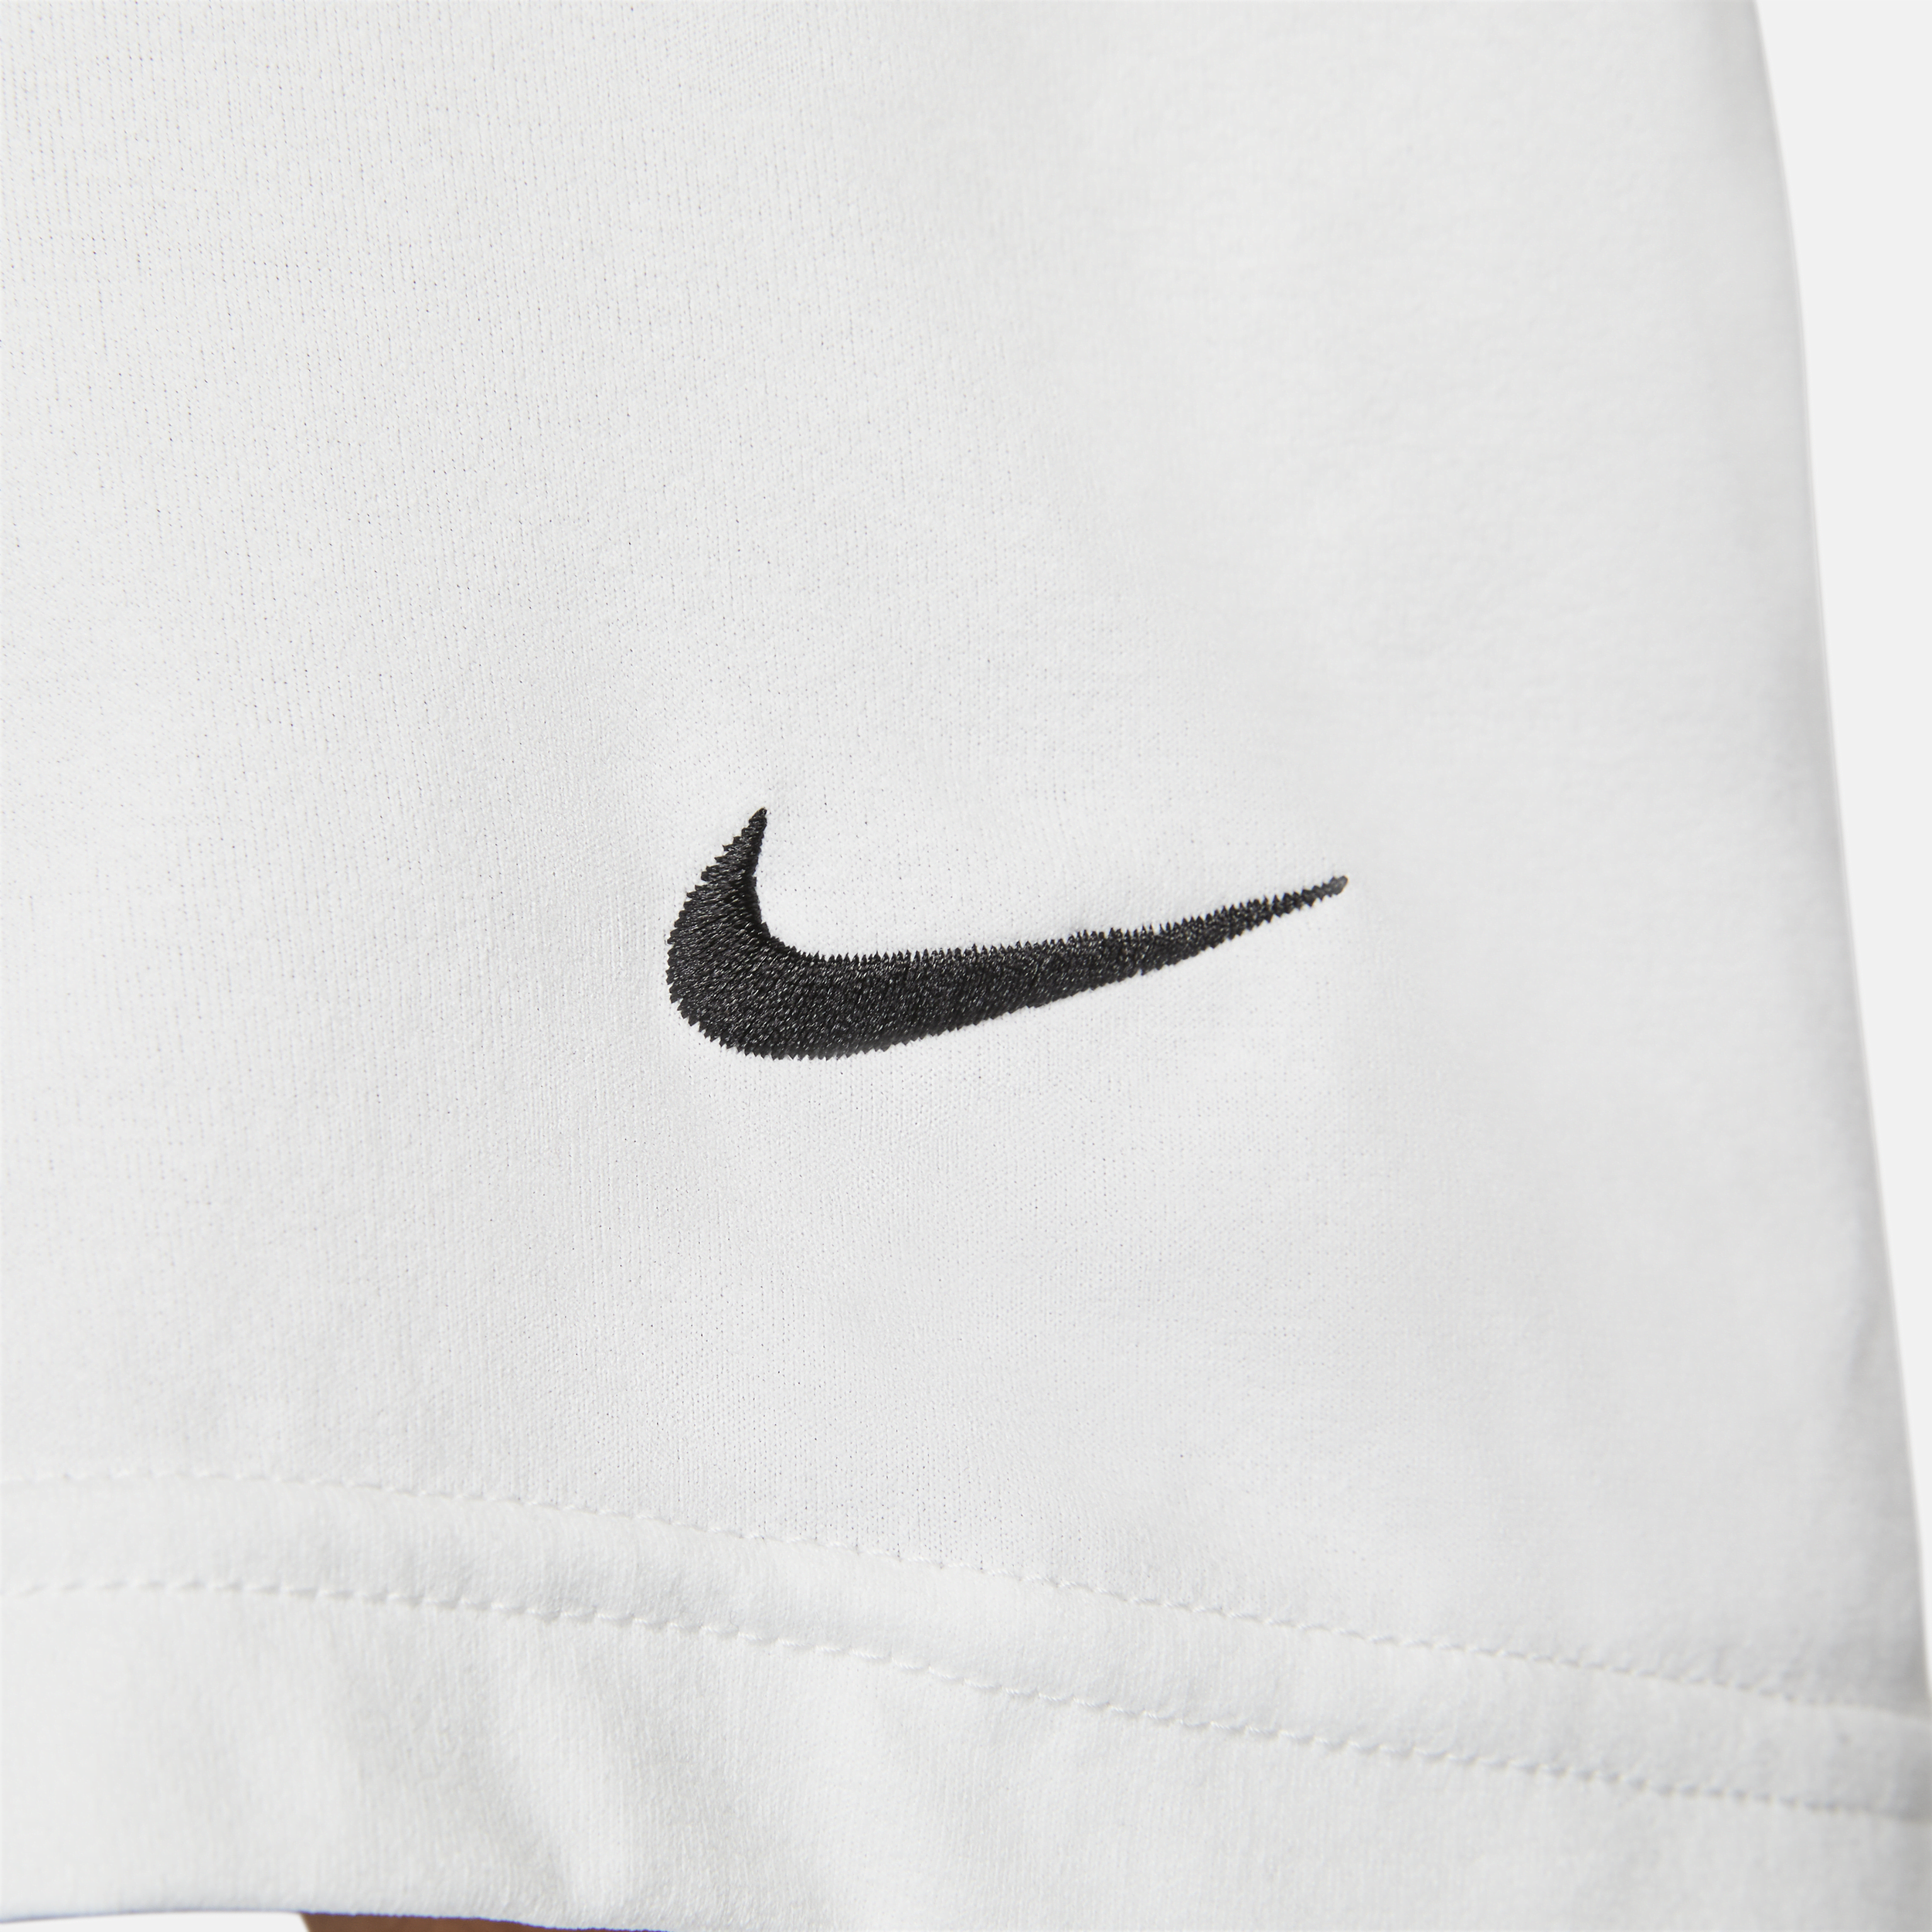 Nike Track Club hardlooptop met korte mouwen en Dri-FIT voor heren Wit